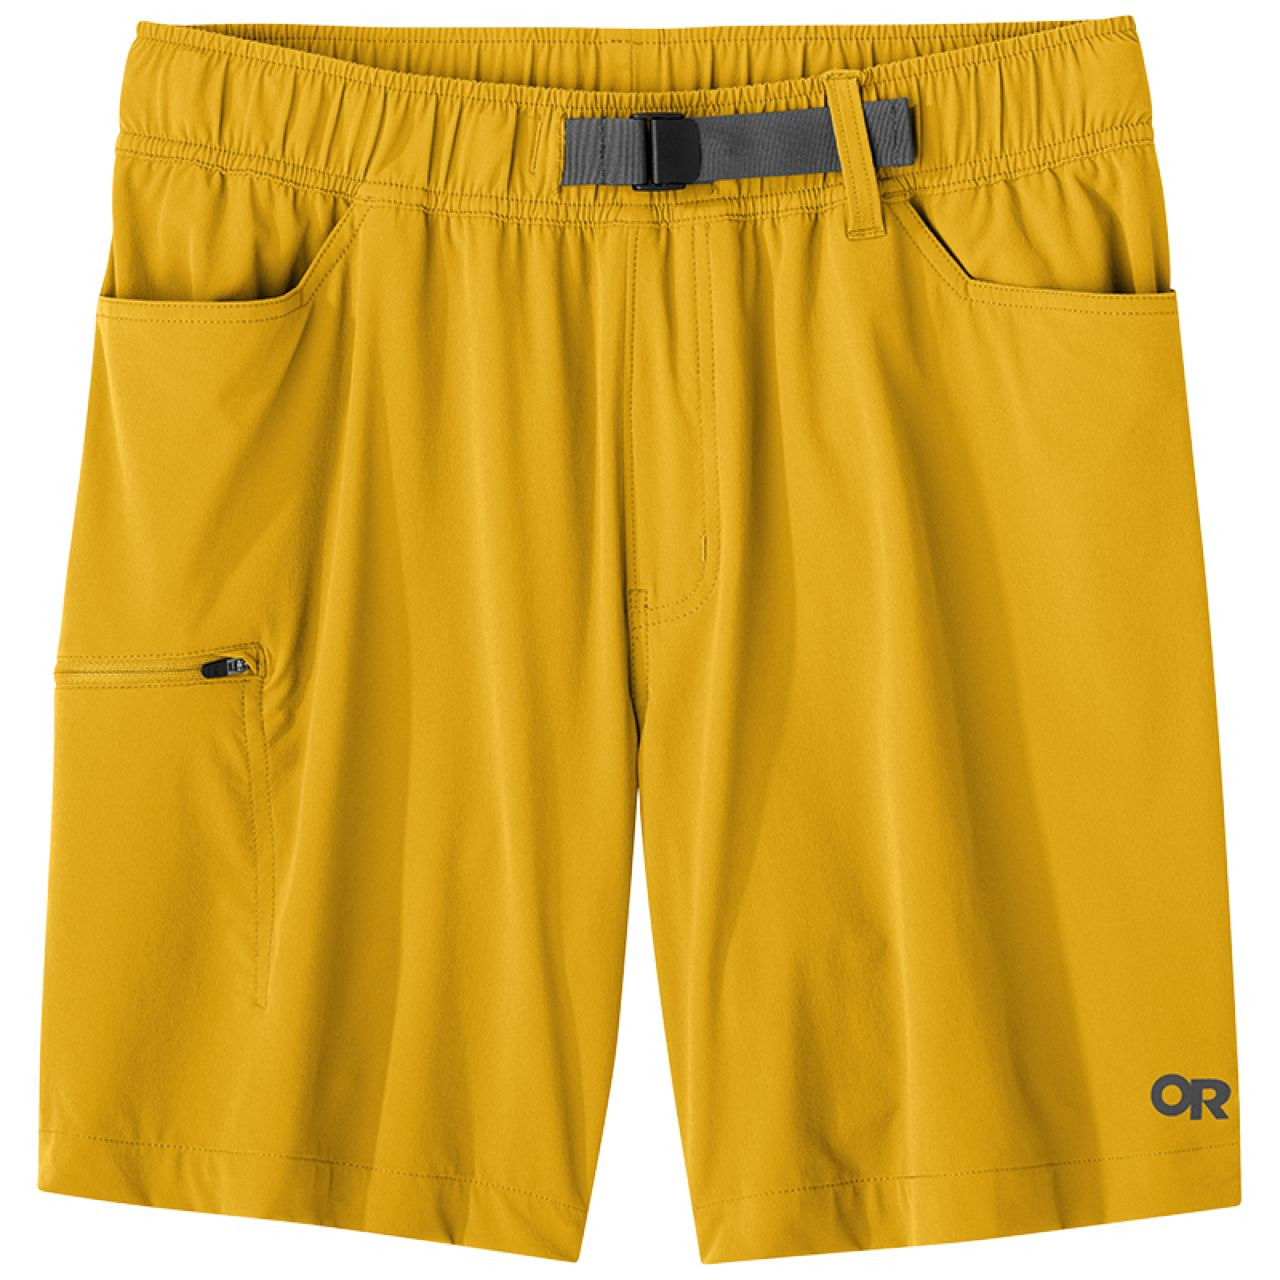 Outdoor Research Ferrosi Shorts 7-inch - Men's | Shorts